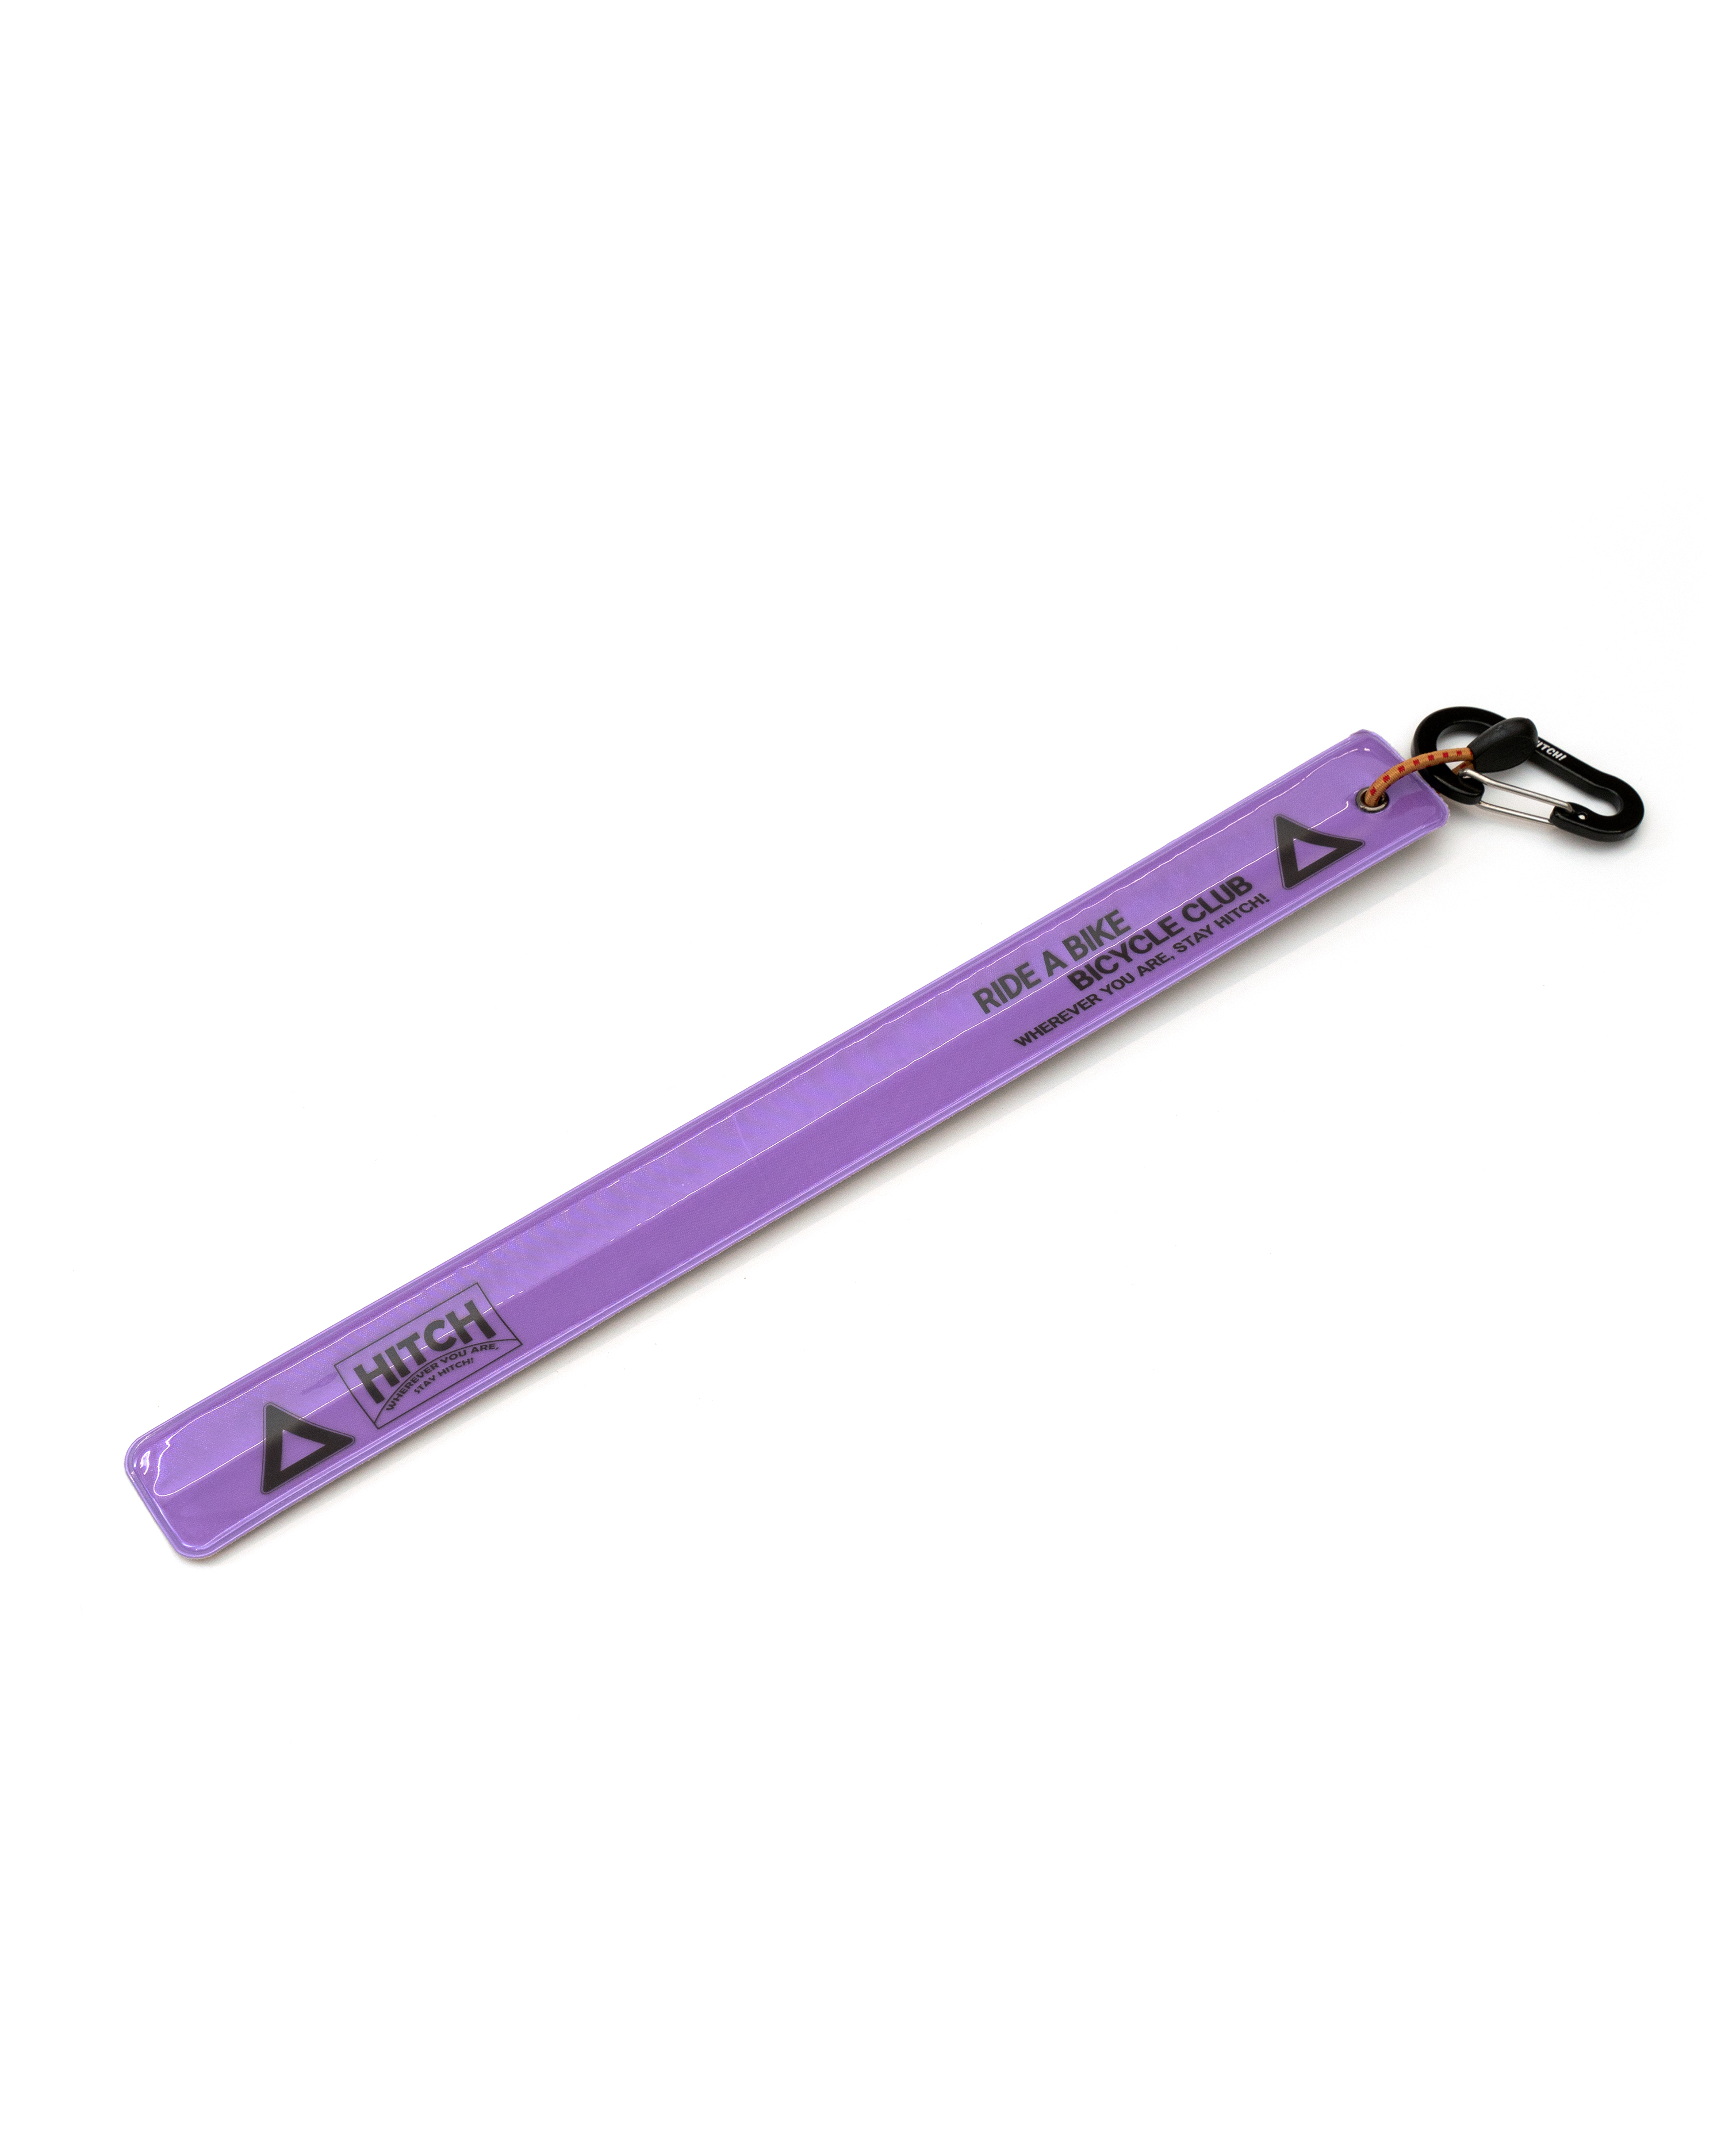 [out of stock] Reflector slapband - purple